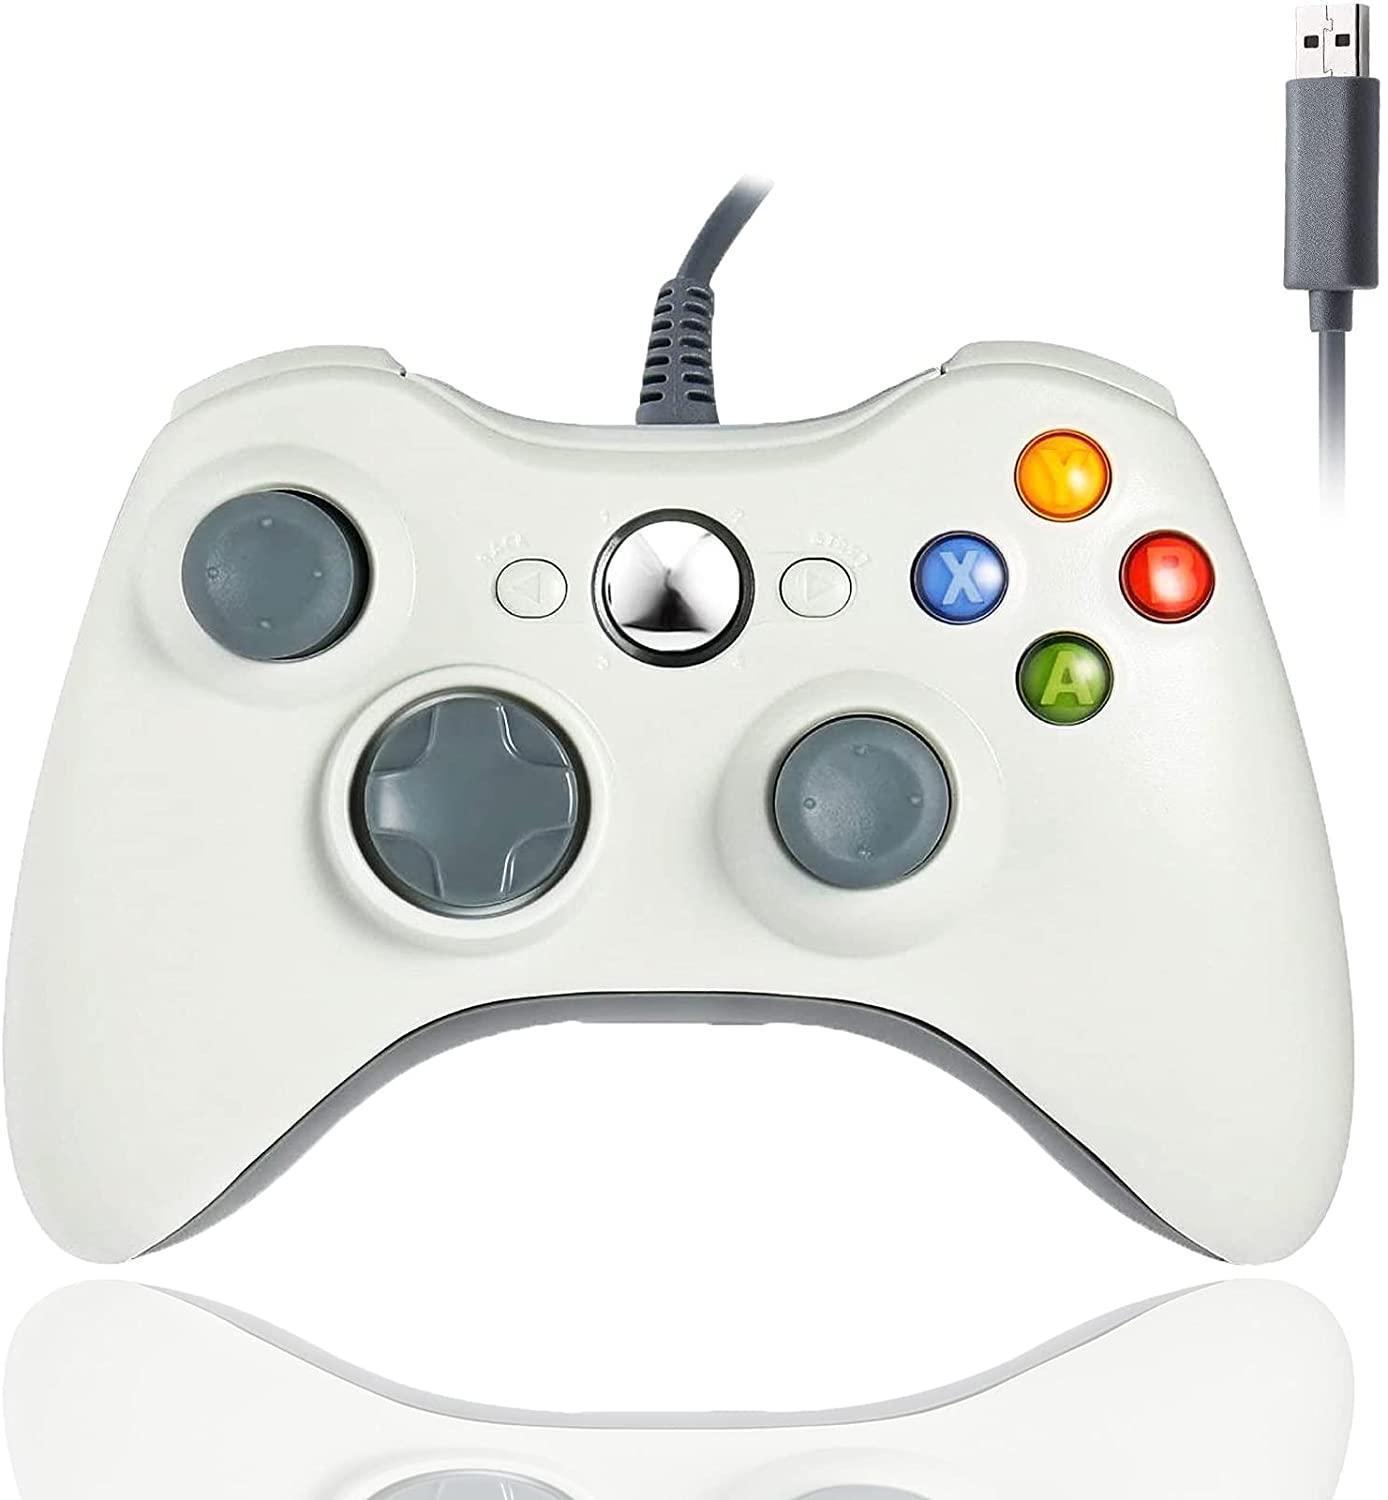 Kablet Kontroller for Xbox 360 - Tredjeparts - RetroGaming.no